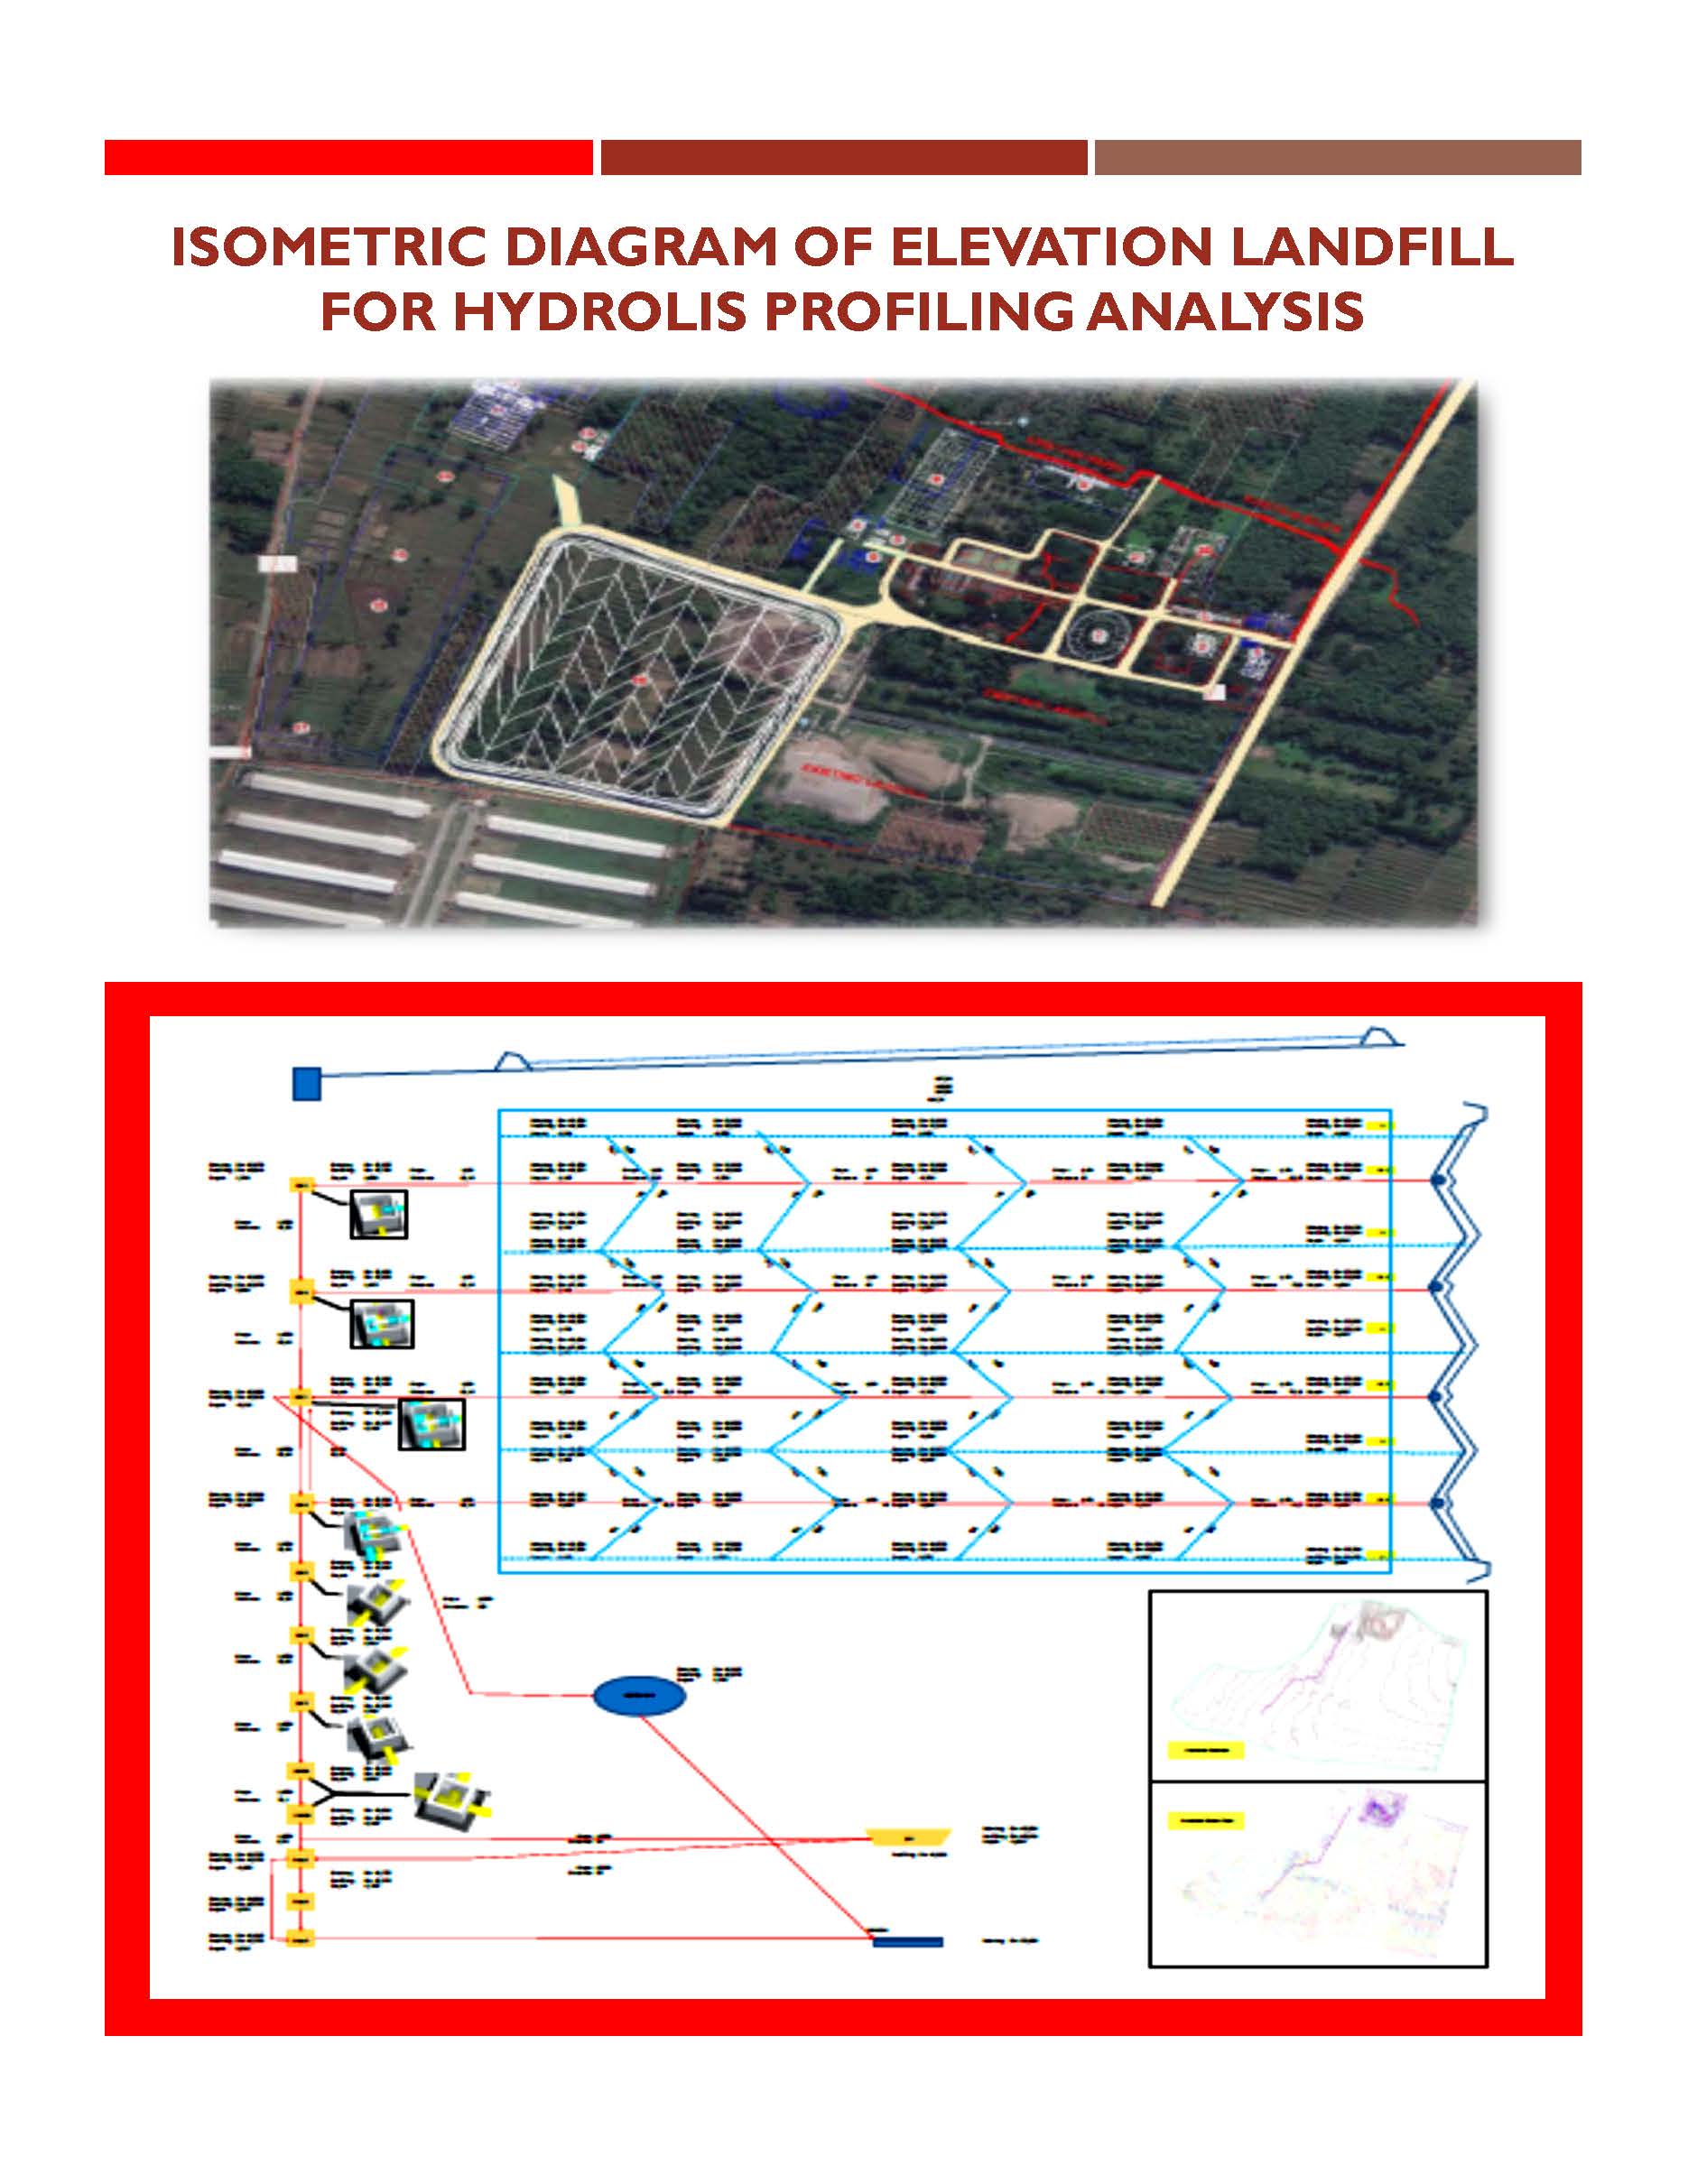 Hydrolis Profile Analysis For Tpa Banjardowo, Jombang Regency